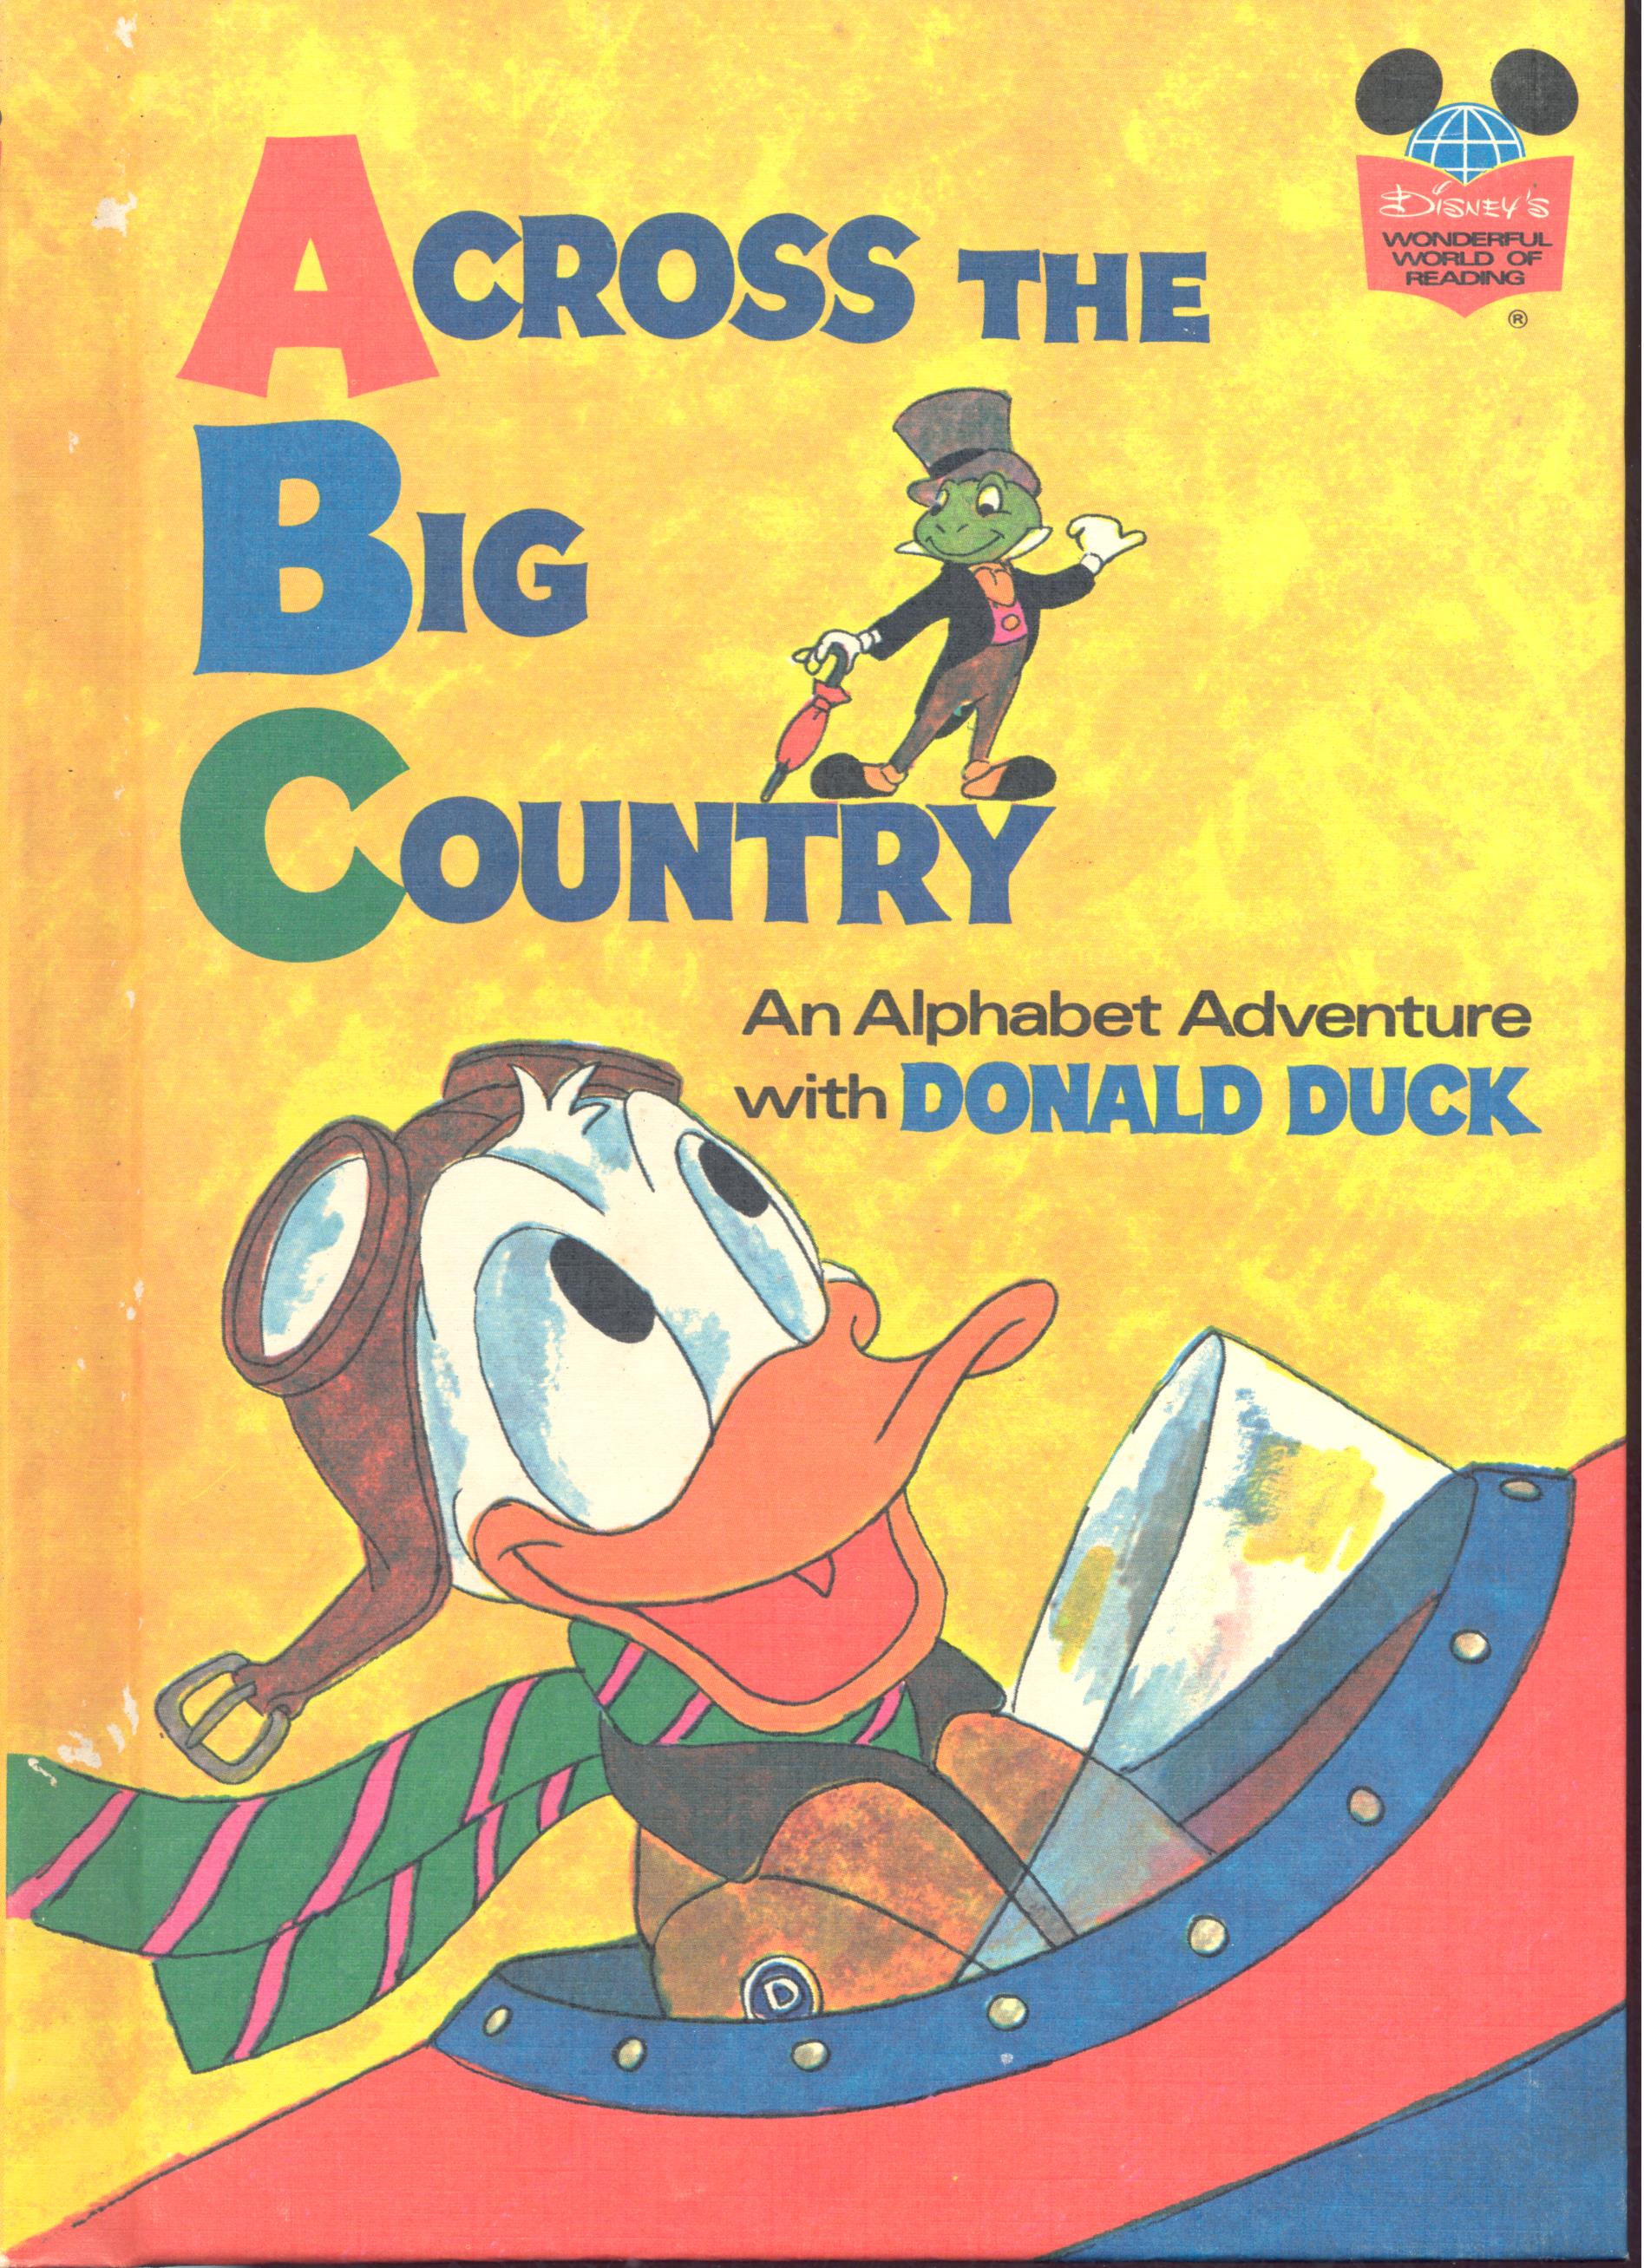 Walt Disney' s across the big country an alphabet adventure with Donald duck.